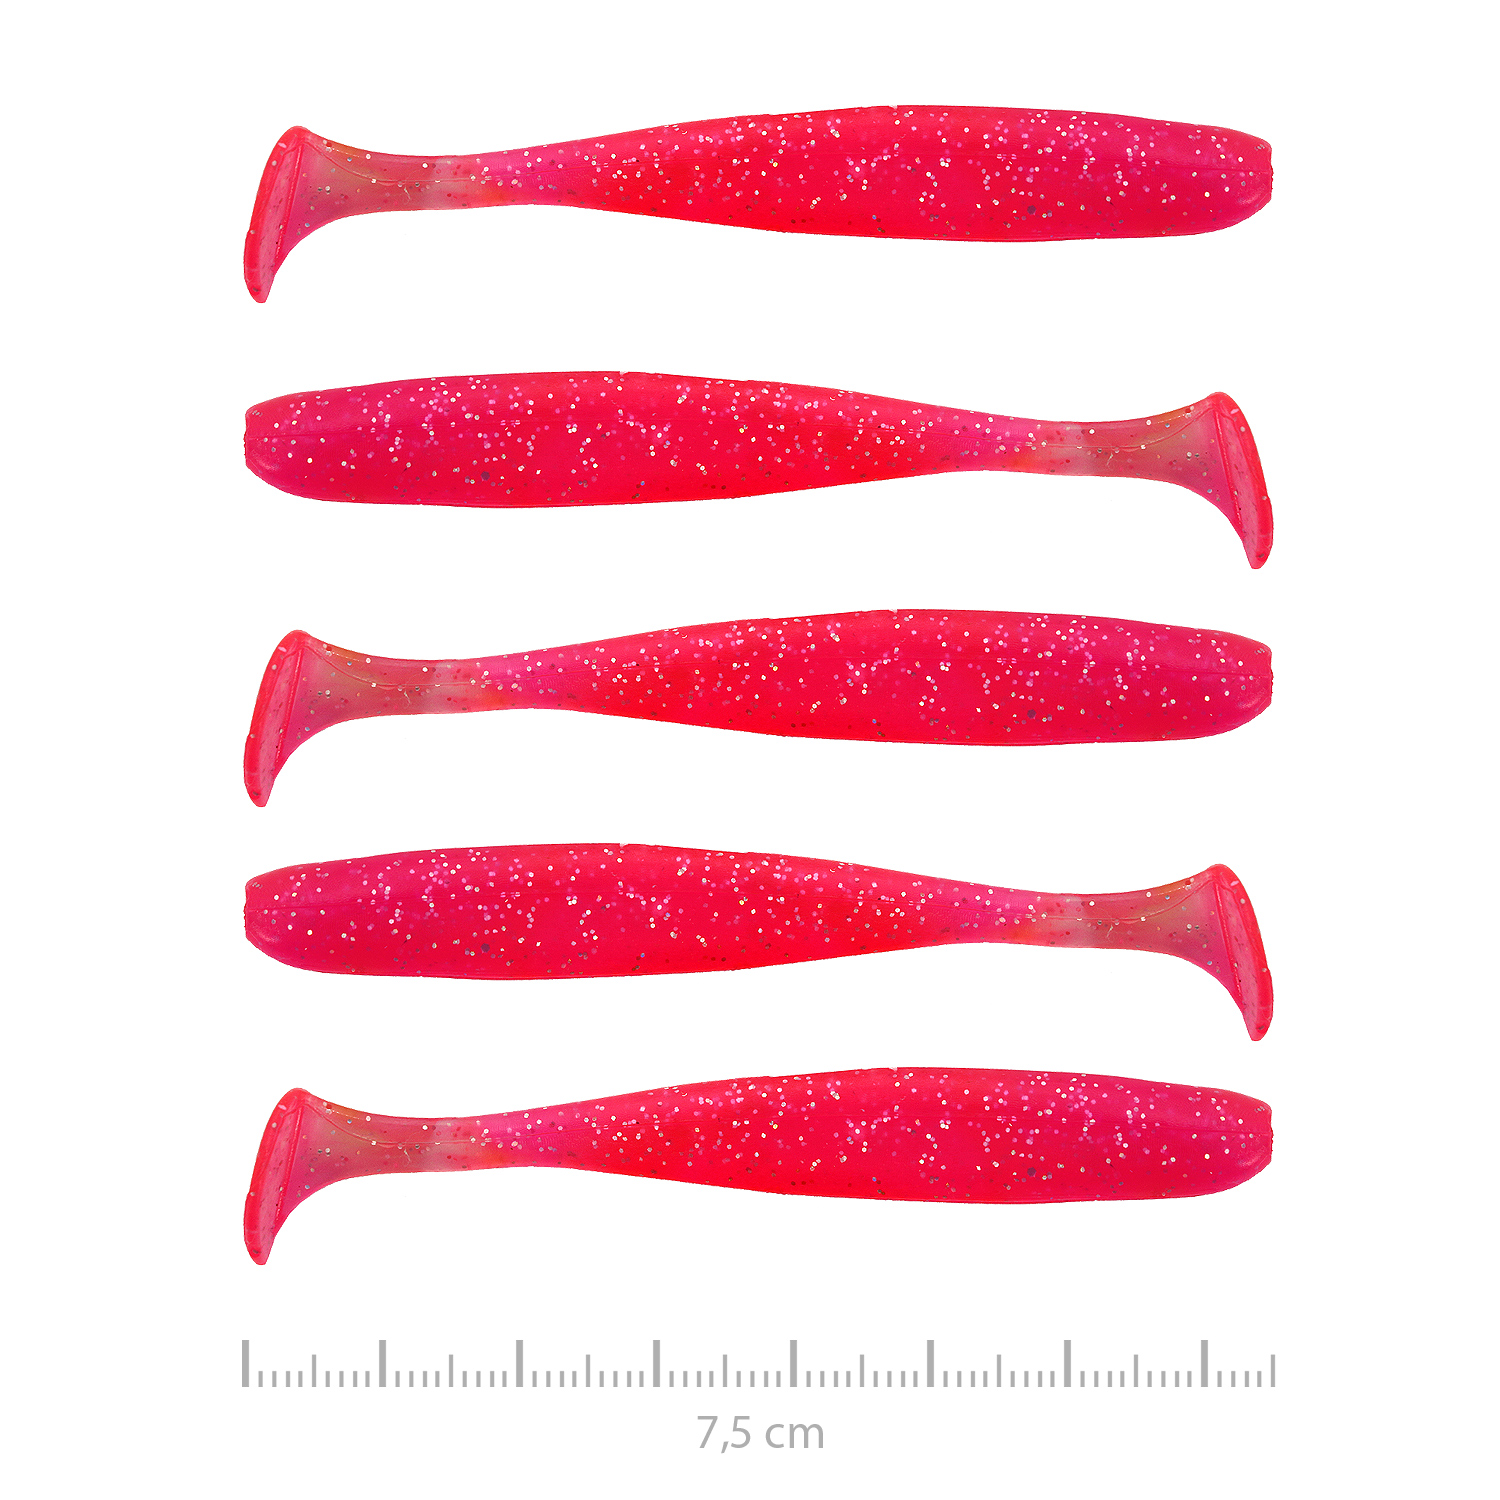 Vantage Shad 7.5cm 5db pink flitter Akci -30%